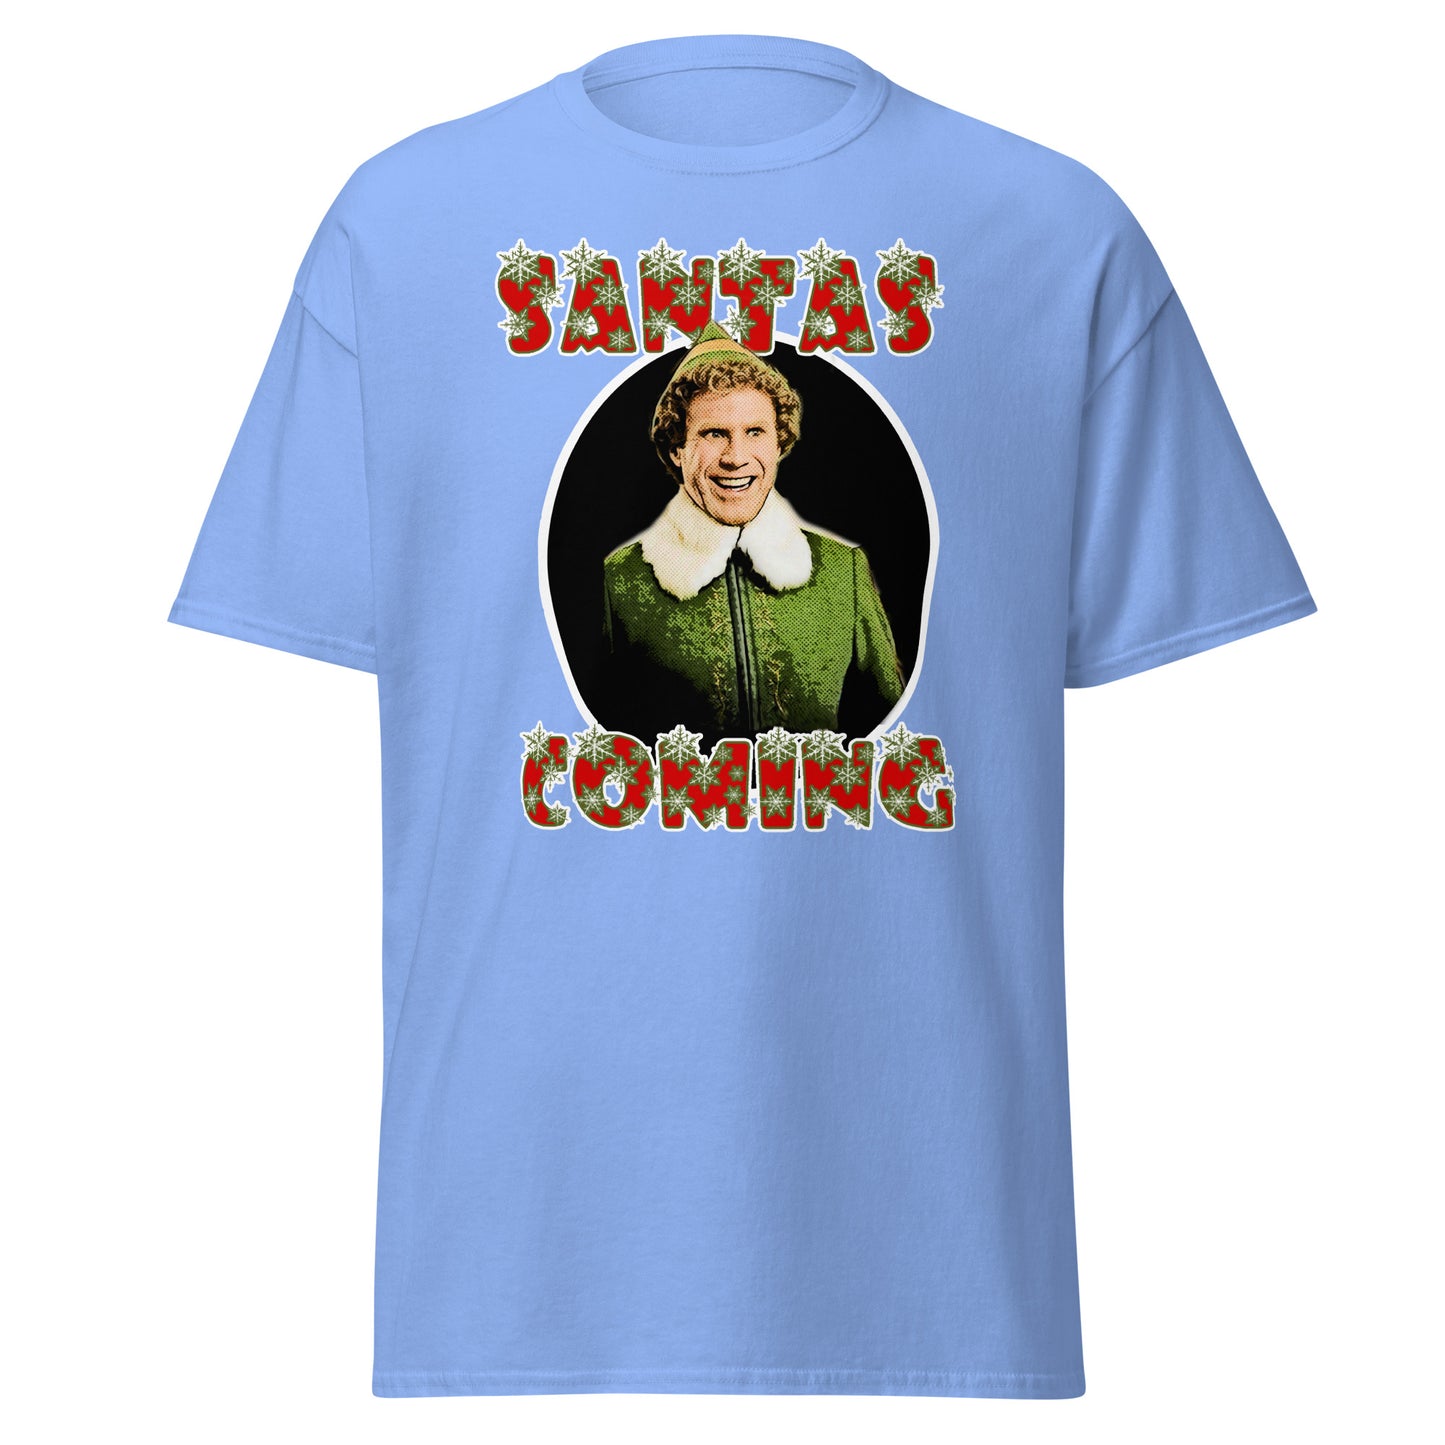 Buddy the Elf - Santa's Coming T-Shirt - Spreading Christmas Cheer